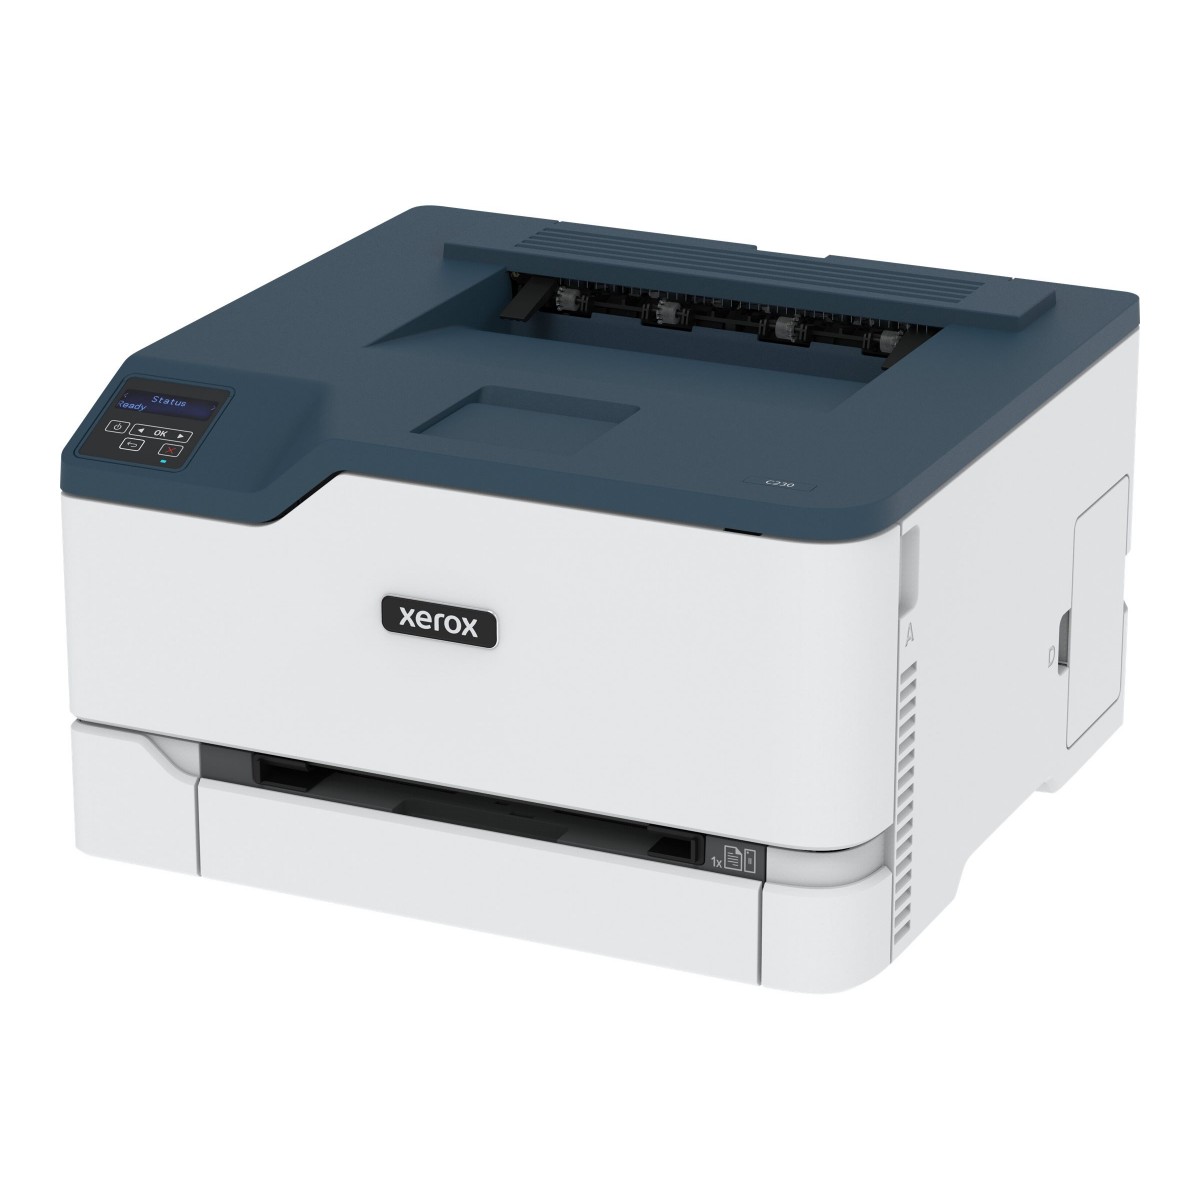 Xerox C230 COLOR PRINTER - Printer